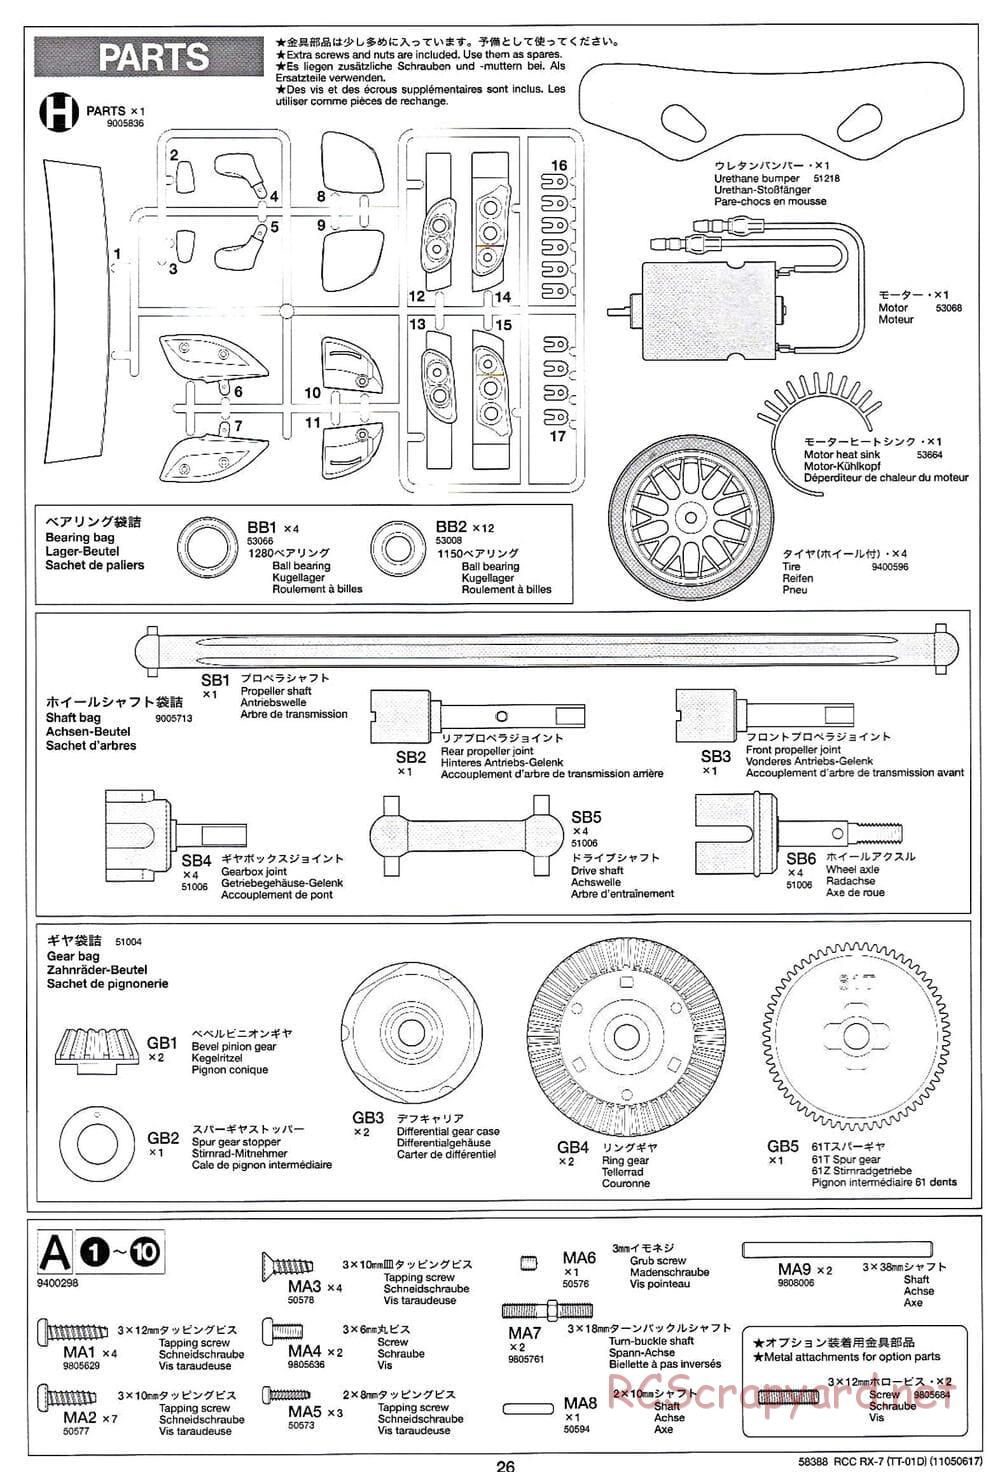 Tamiya - Mazda RX-7 - Drift Spec - TT-01D Chassis - Manual - Page 26